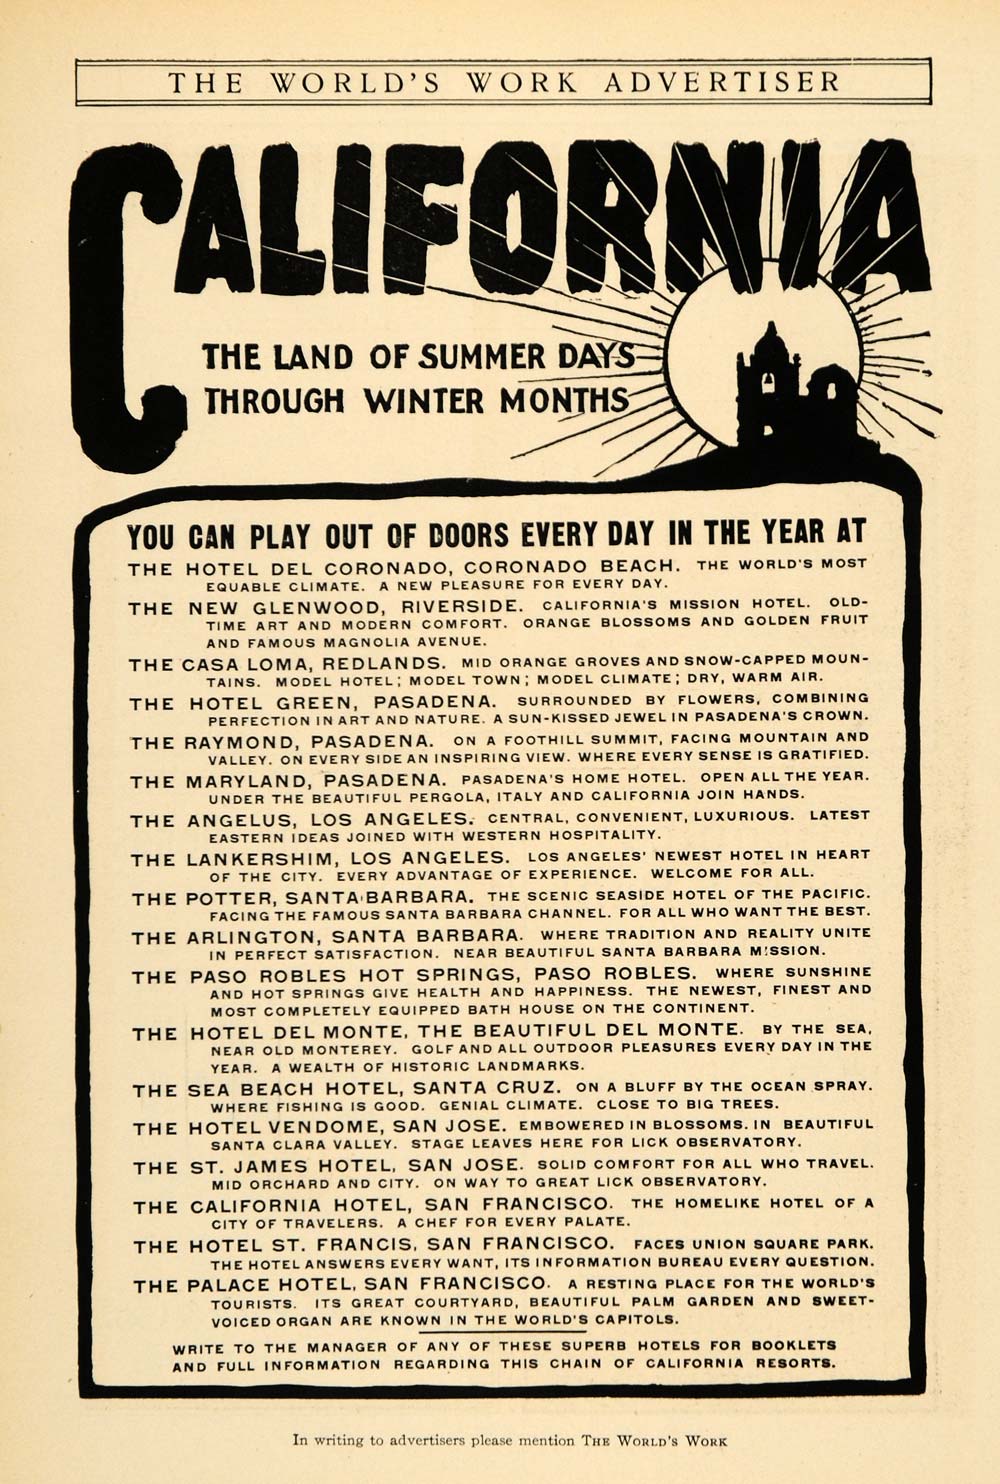 1905 Ad California Hotels Casa Loma Vendome St. James - ORIGINAL ADVERTISING WW3